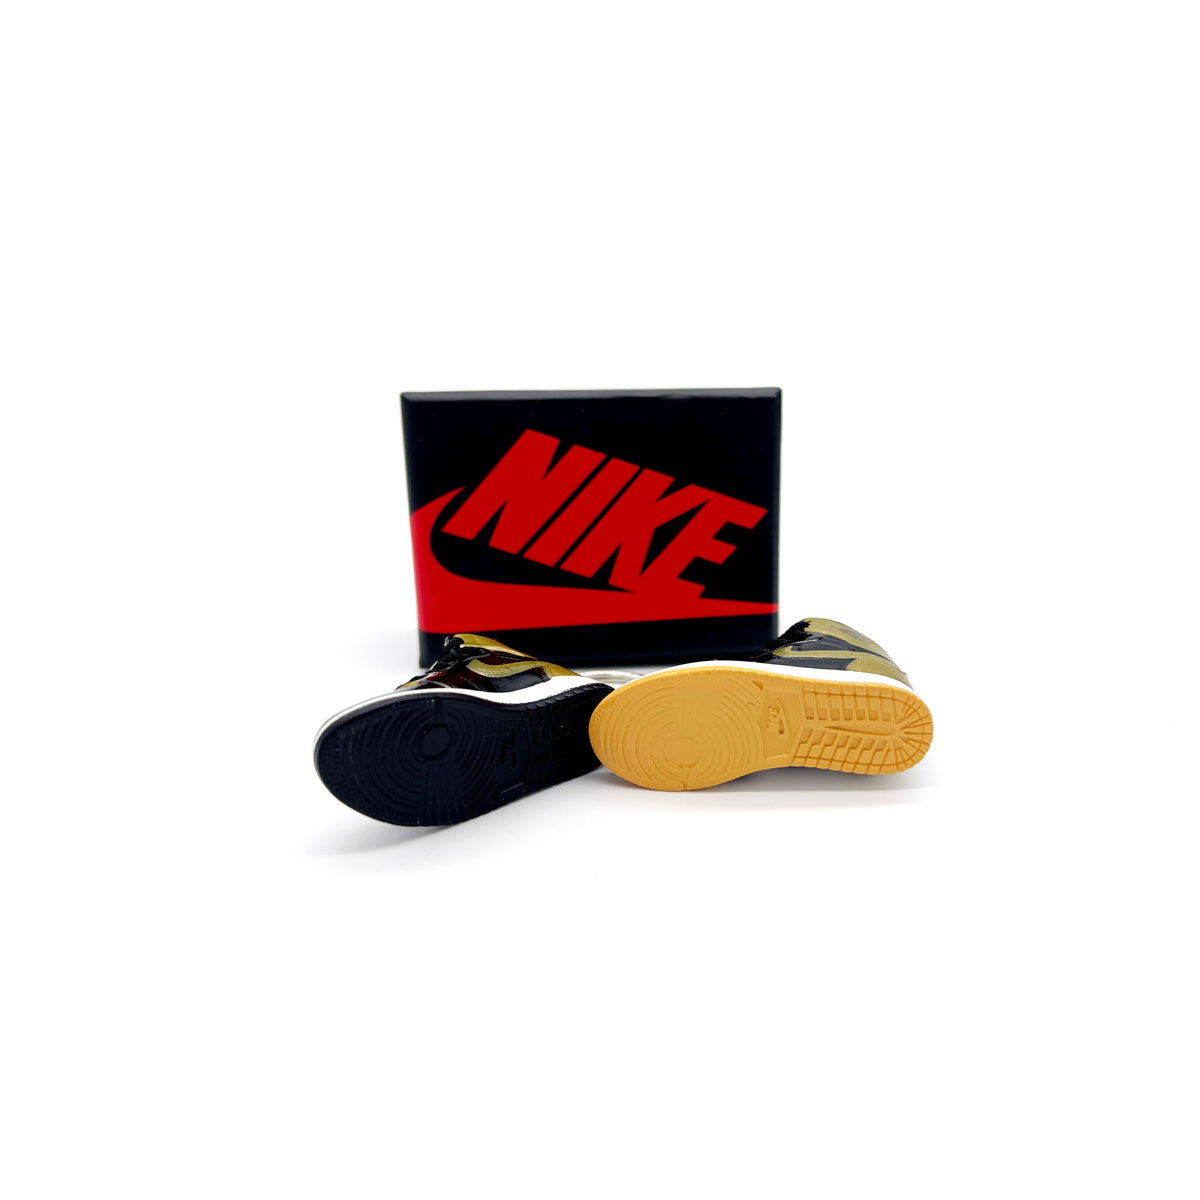 3D Sneaker Keychain - Air Jordan 1 High Gold Top 3 Pair